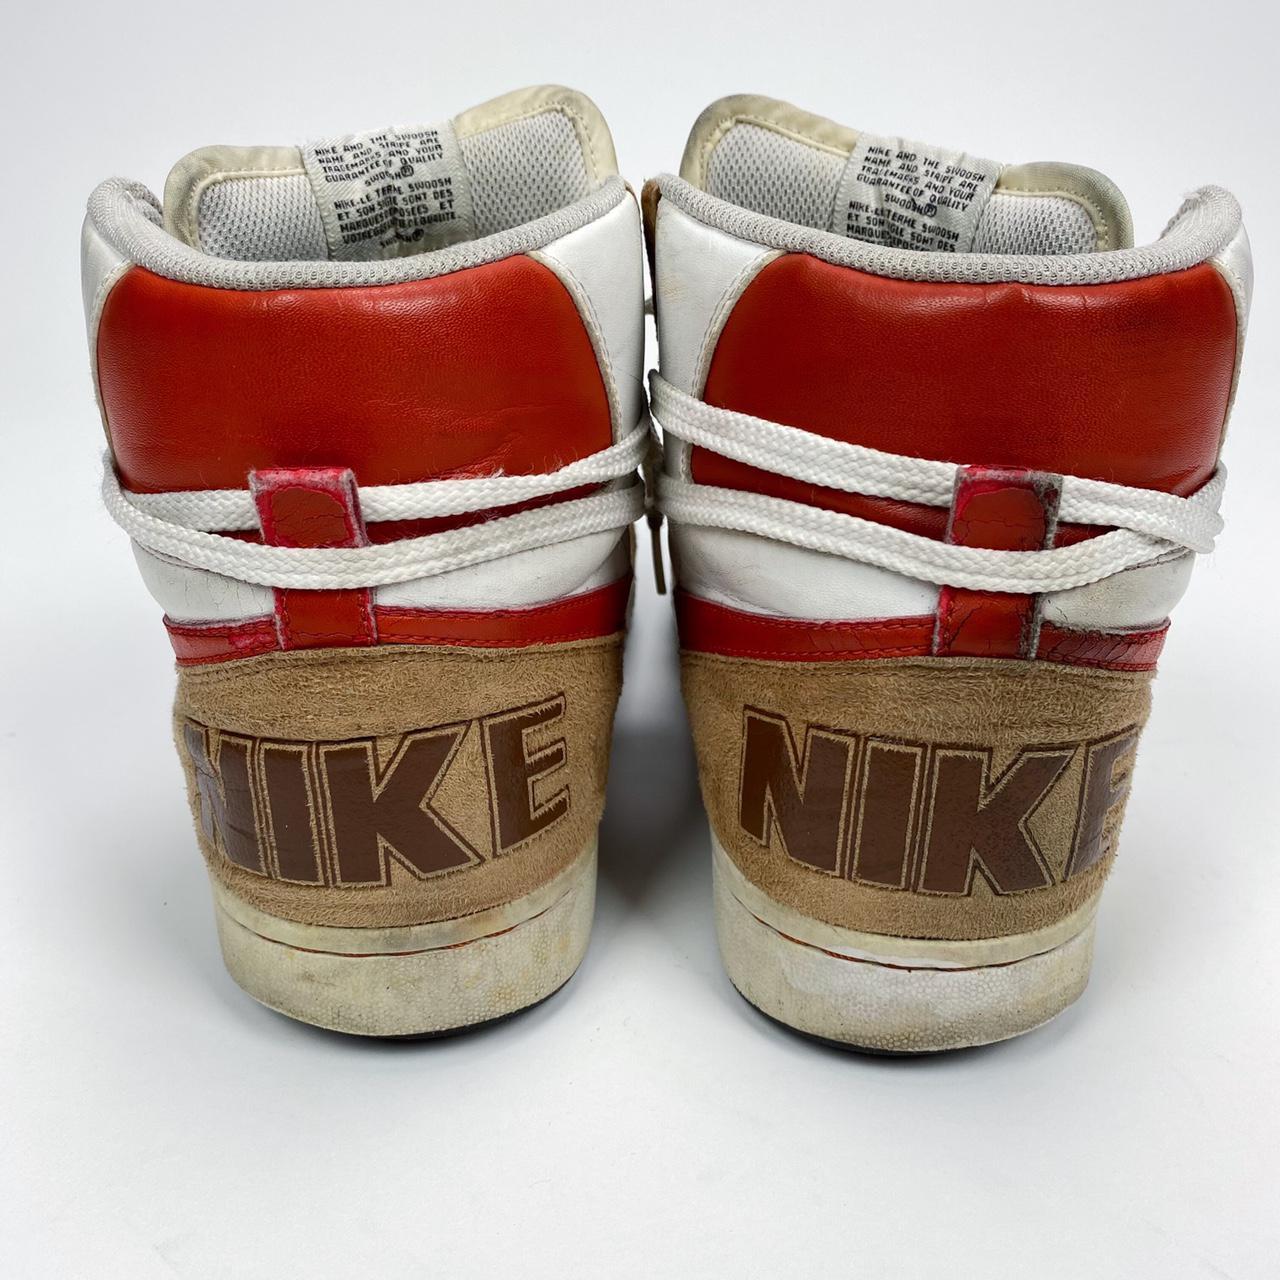 Product Image 3 - Vintage Nike terminator (2010)

Inspo for